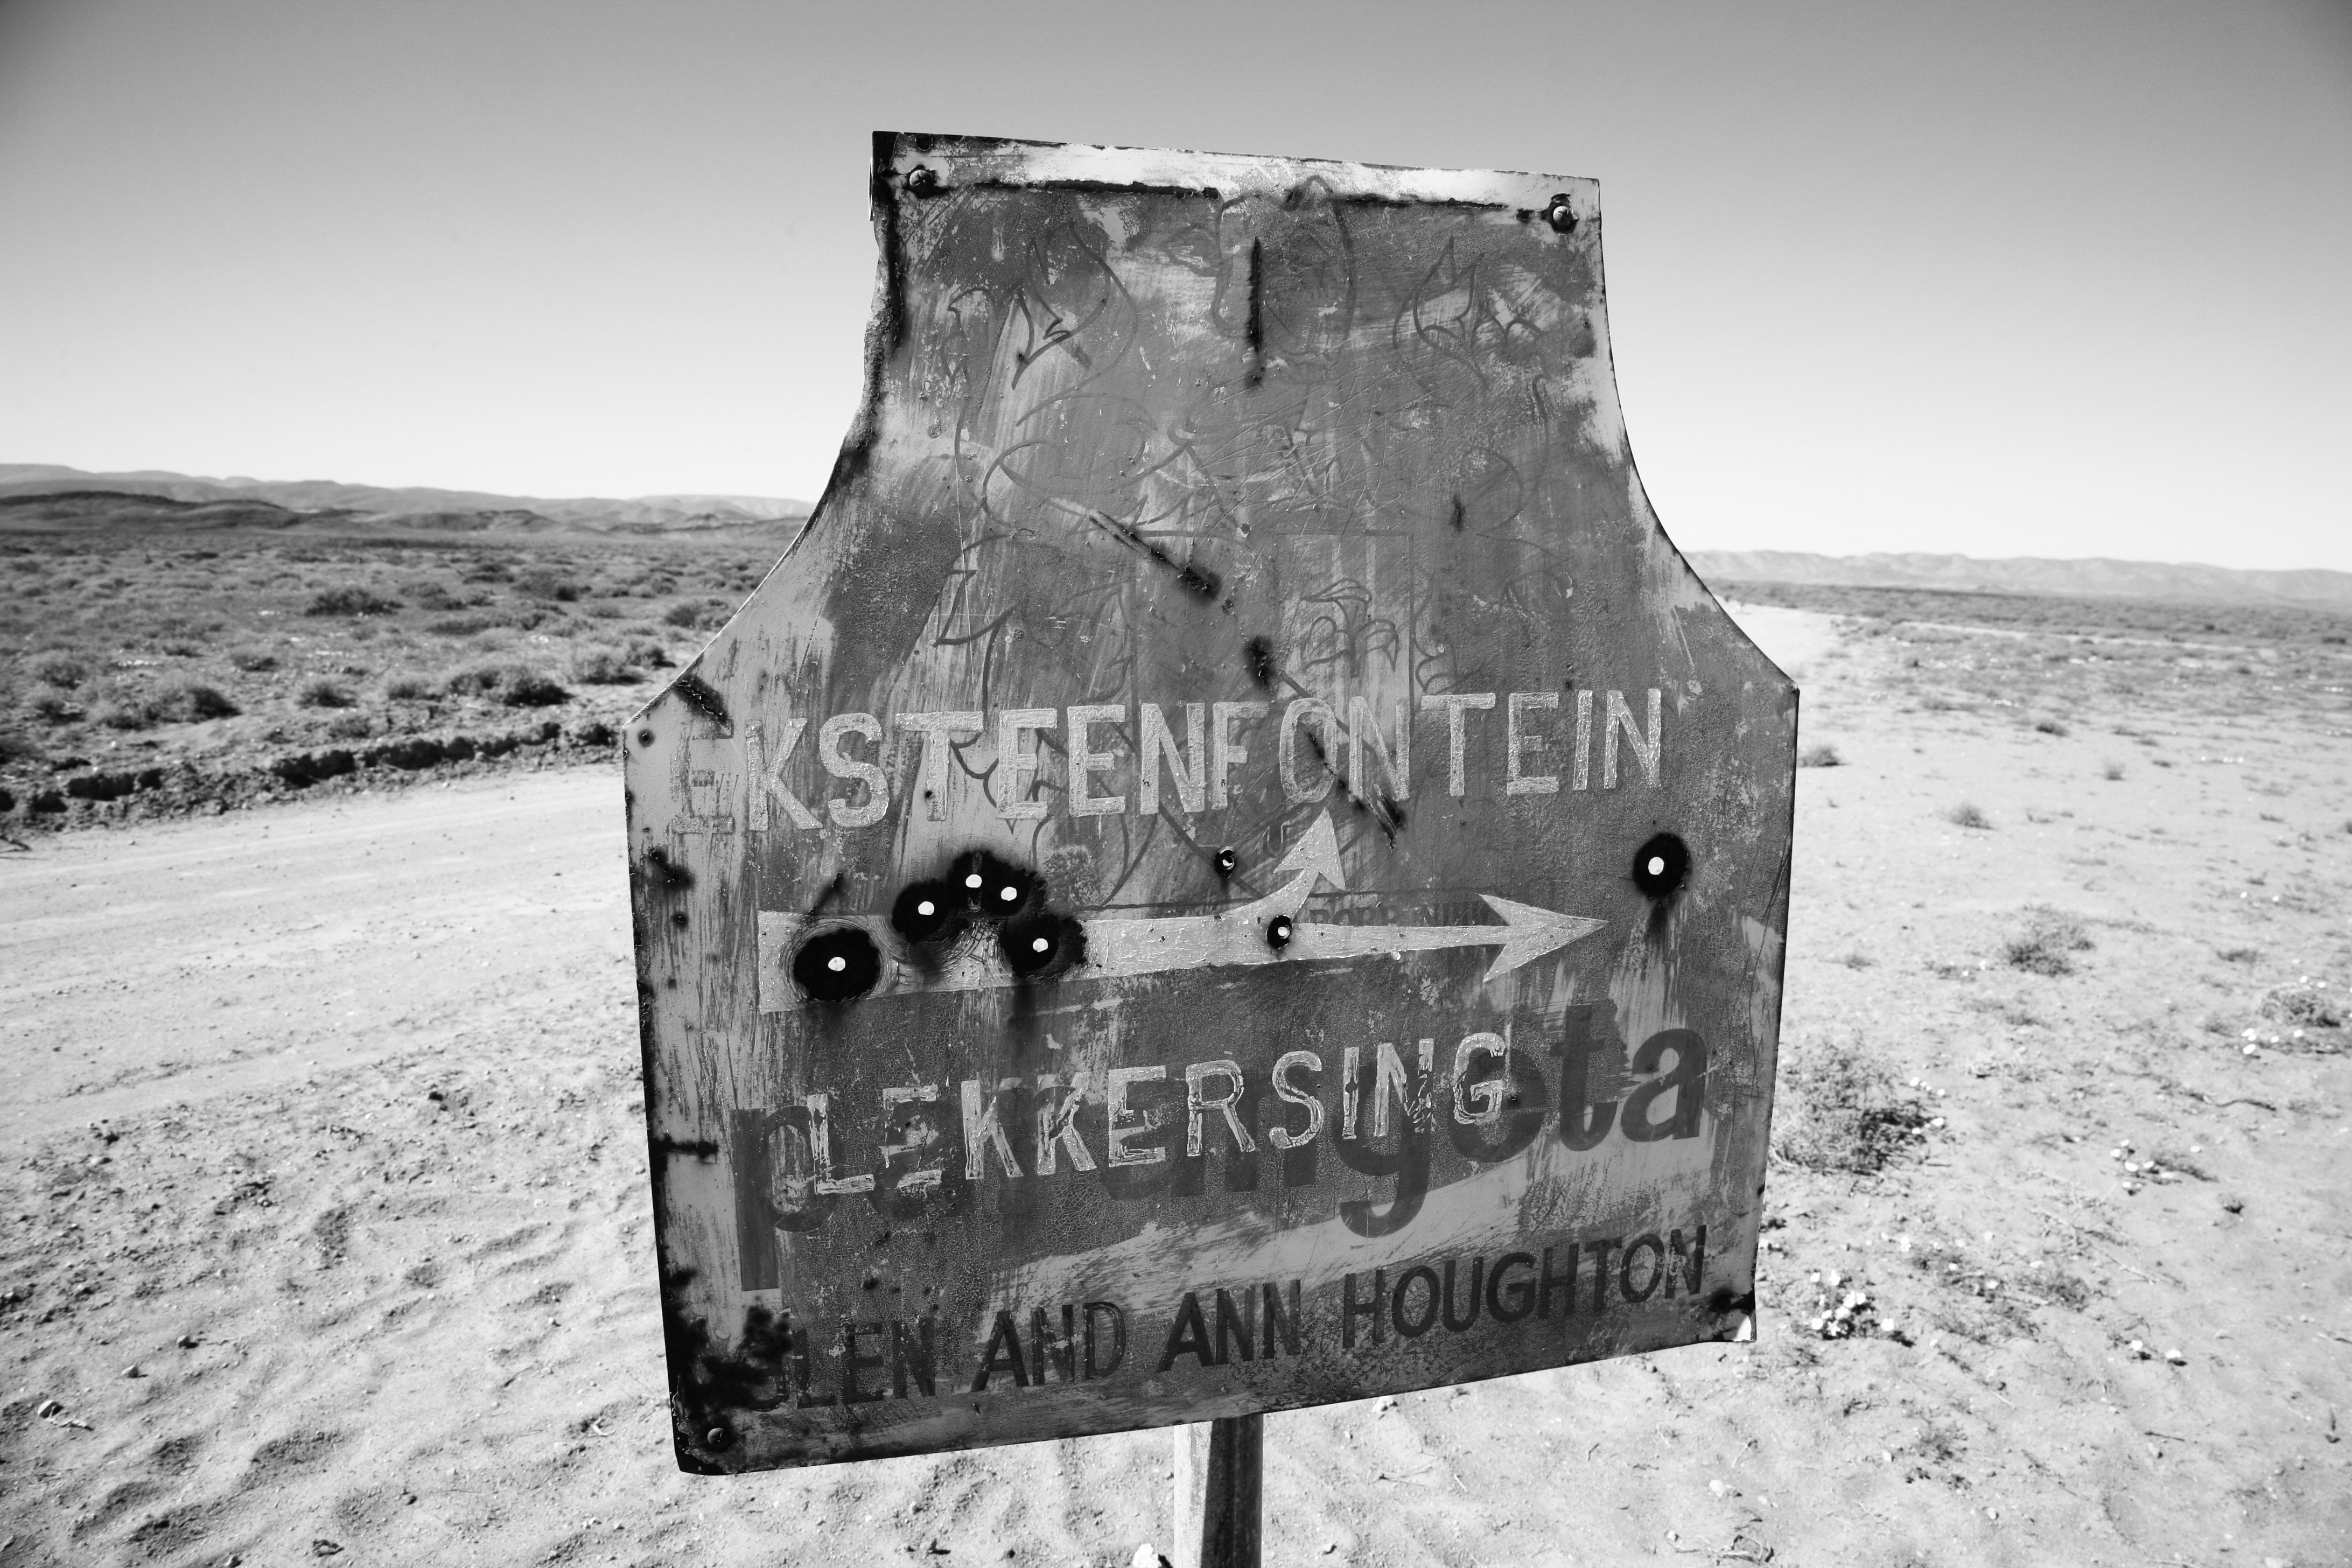 At the crossroads – Eksteenfontein or Lekkersing?